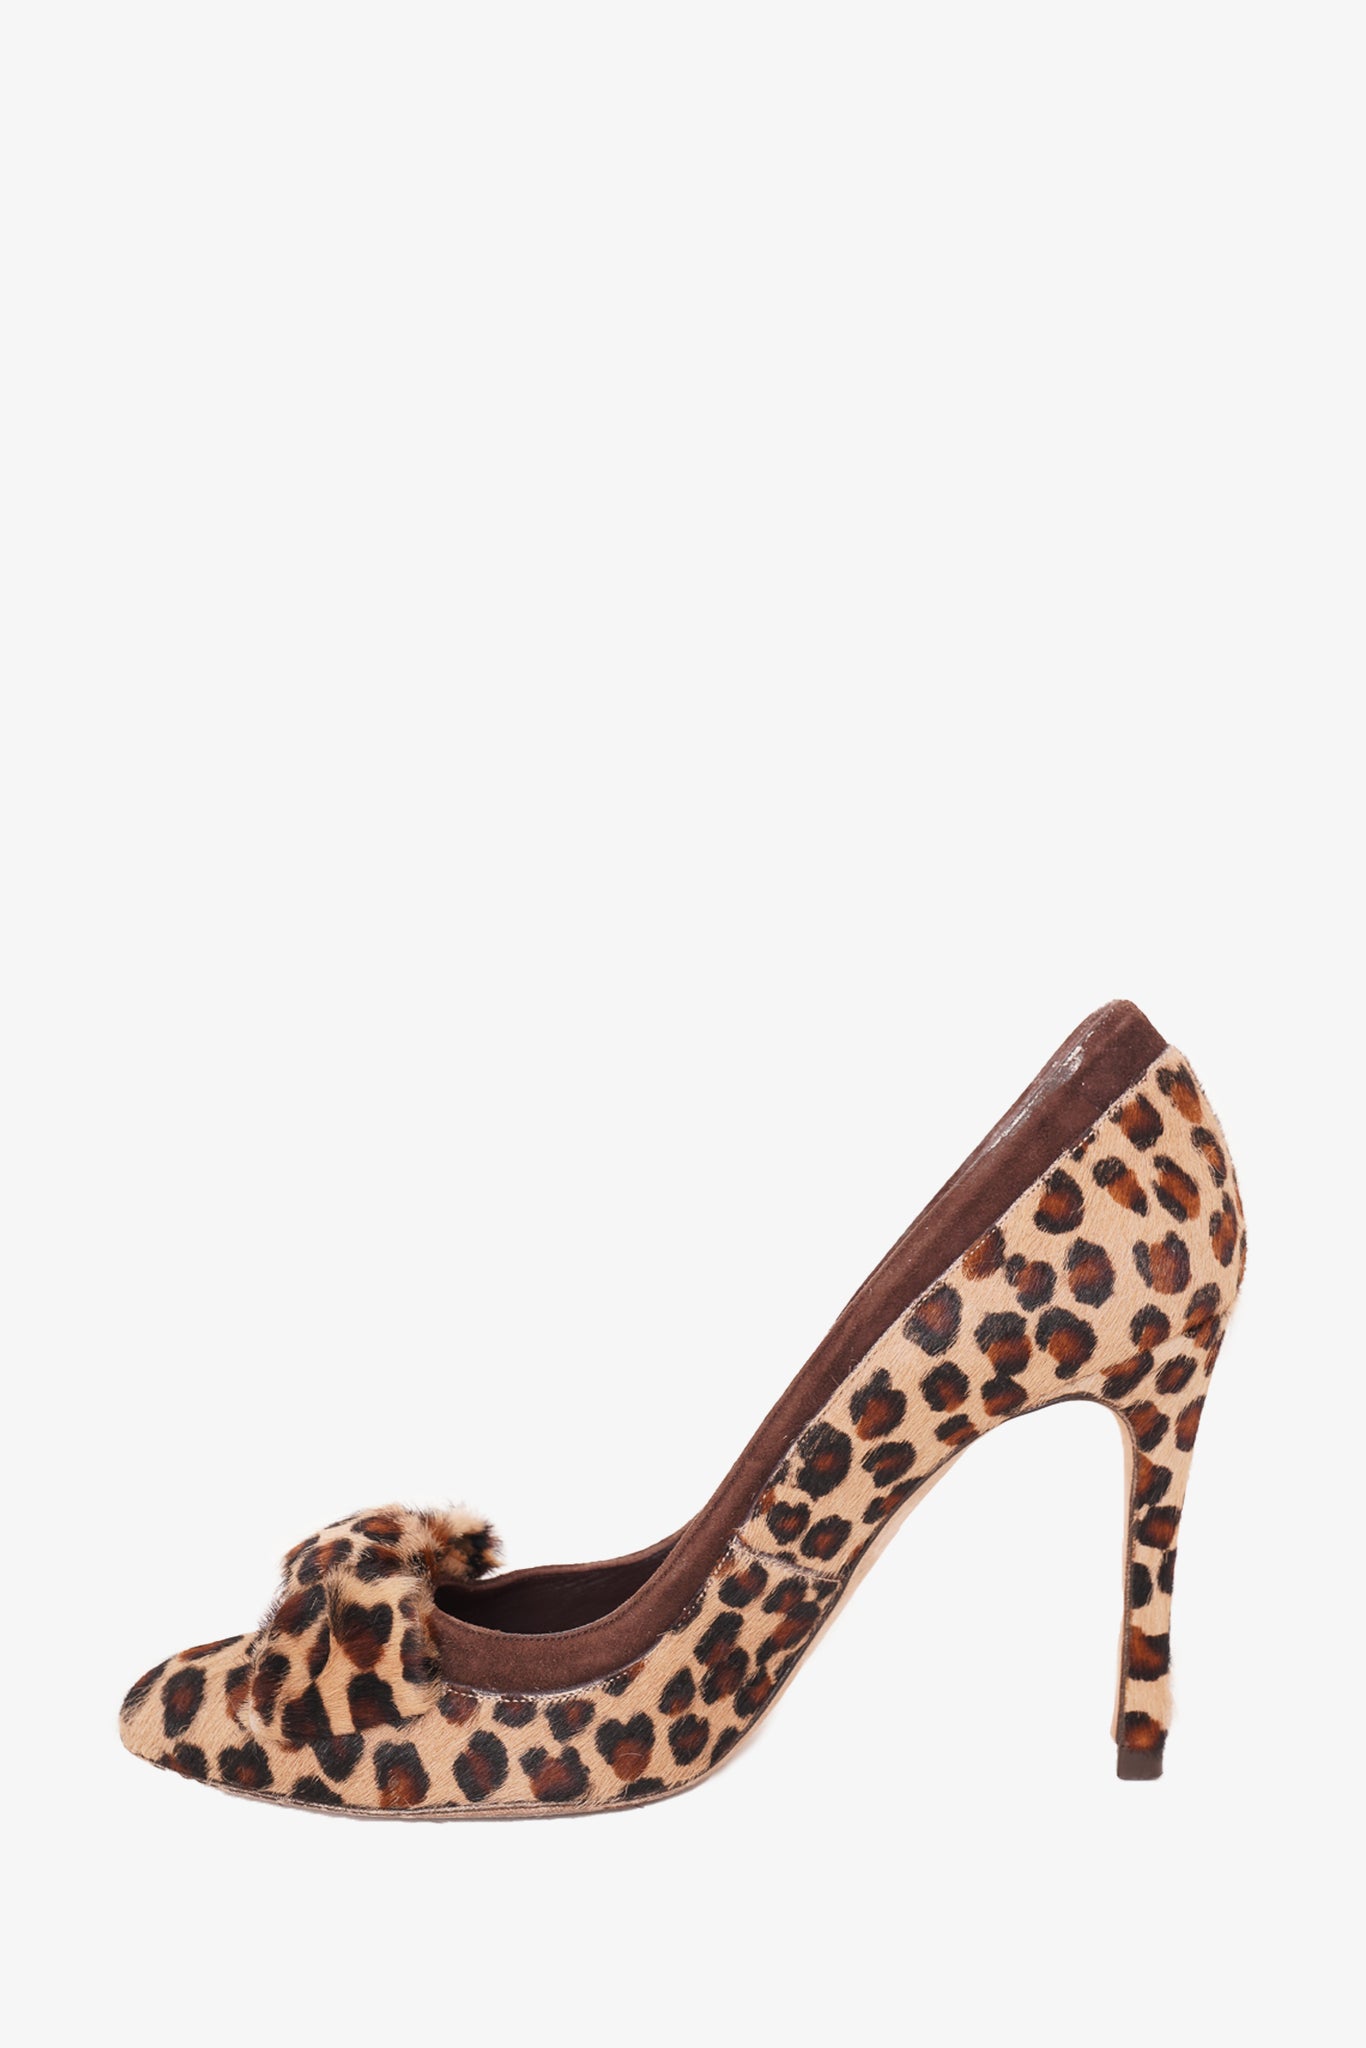 Carolina Herrera Leopard Print Pointed Toe Heels with Bow Size 38